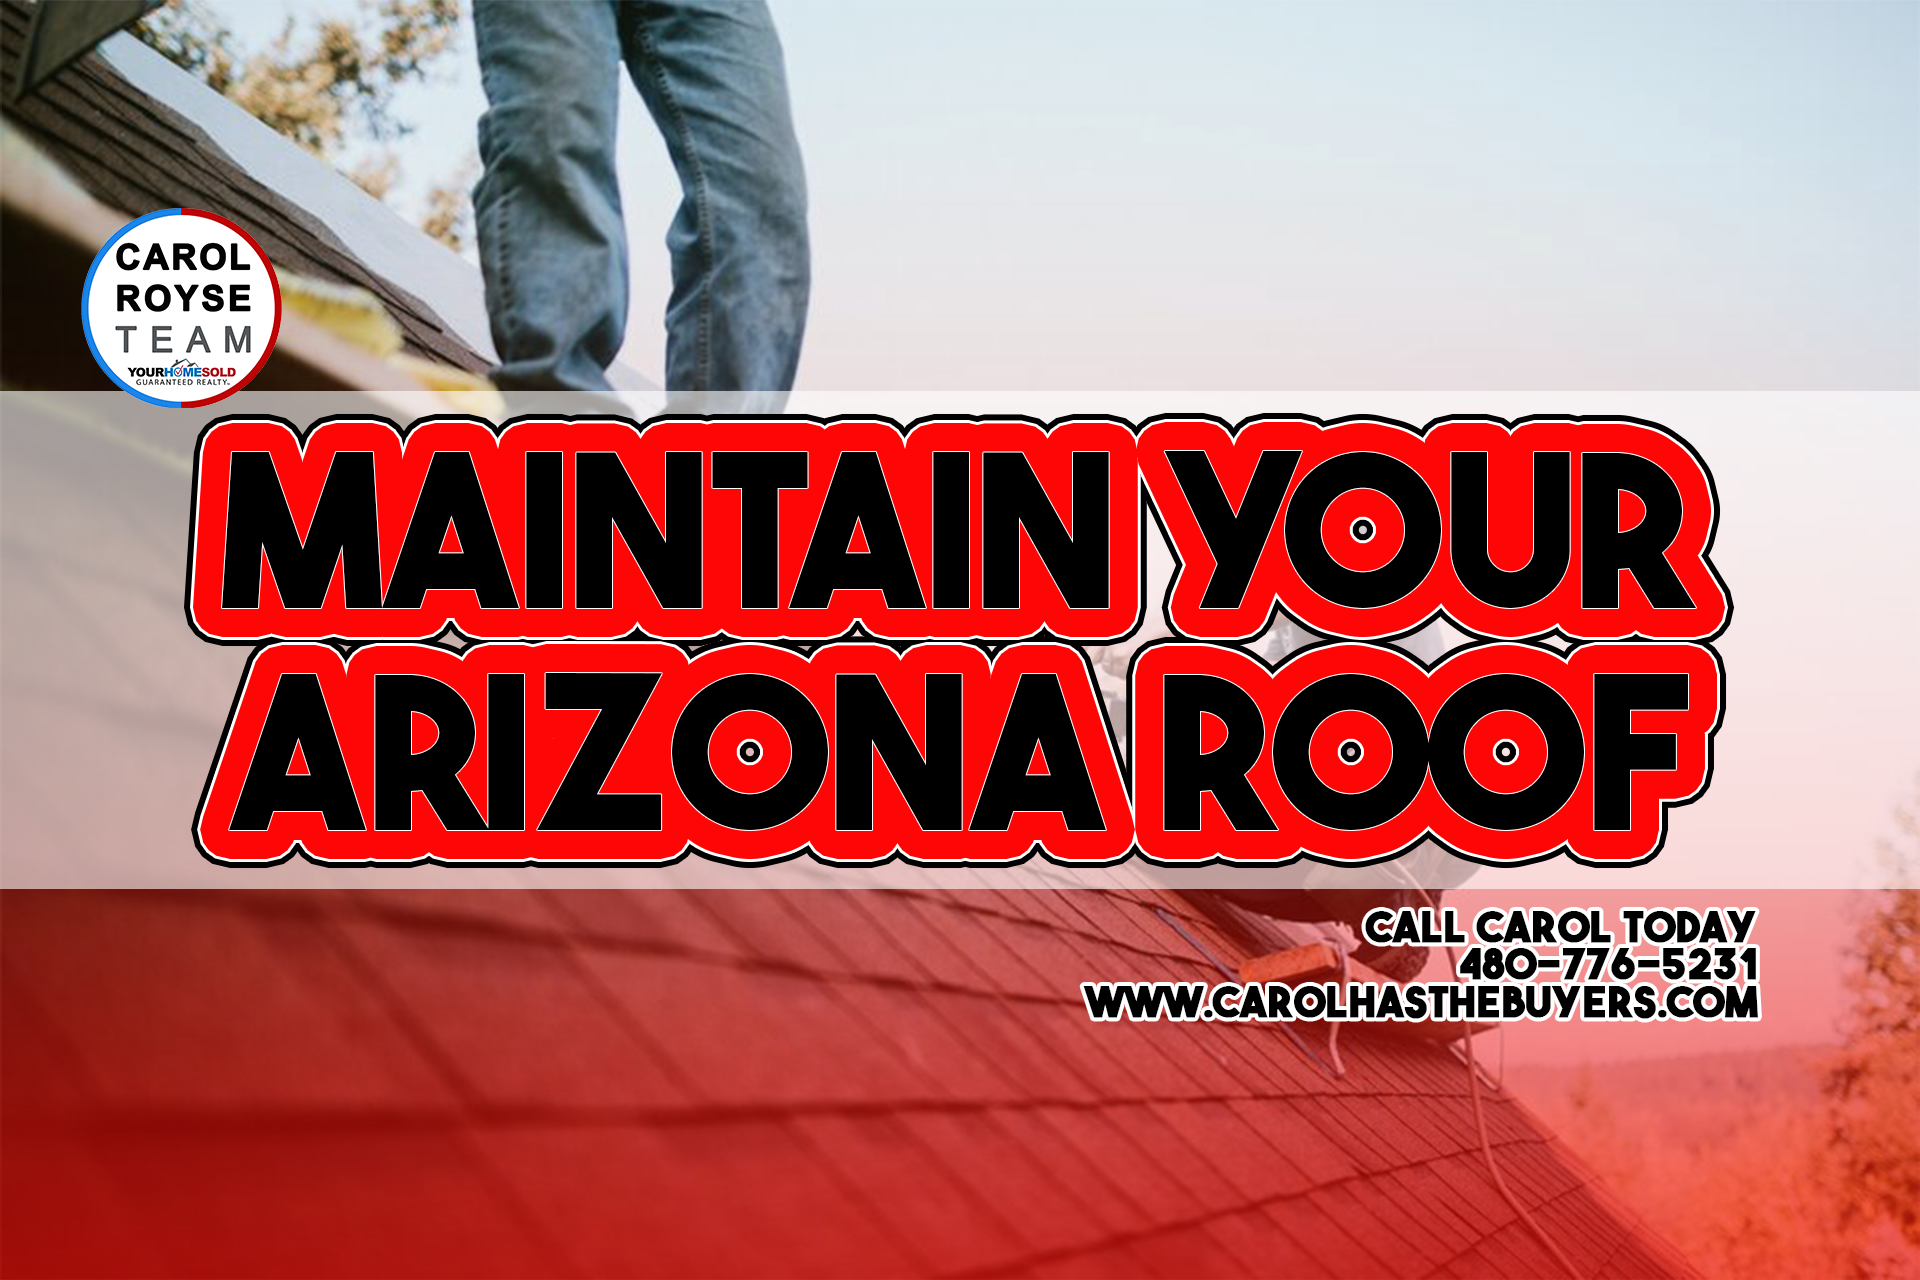 Maintain your Arizona roof